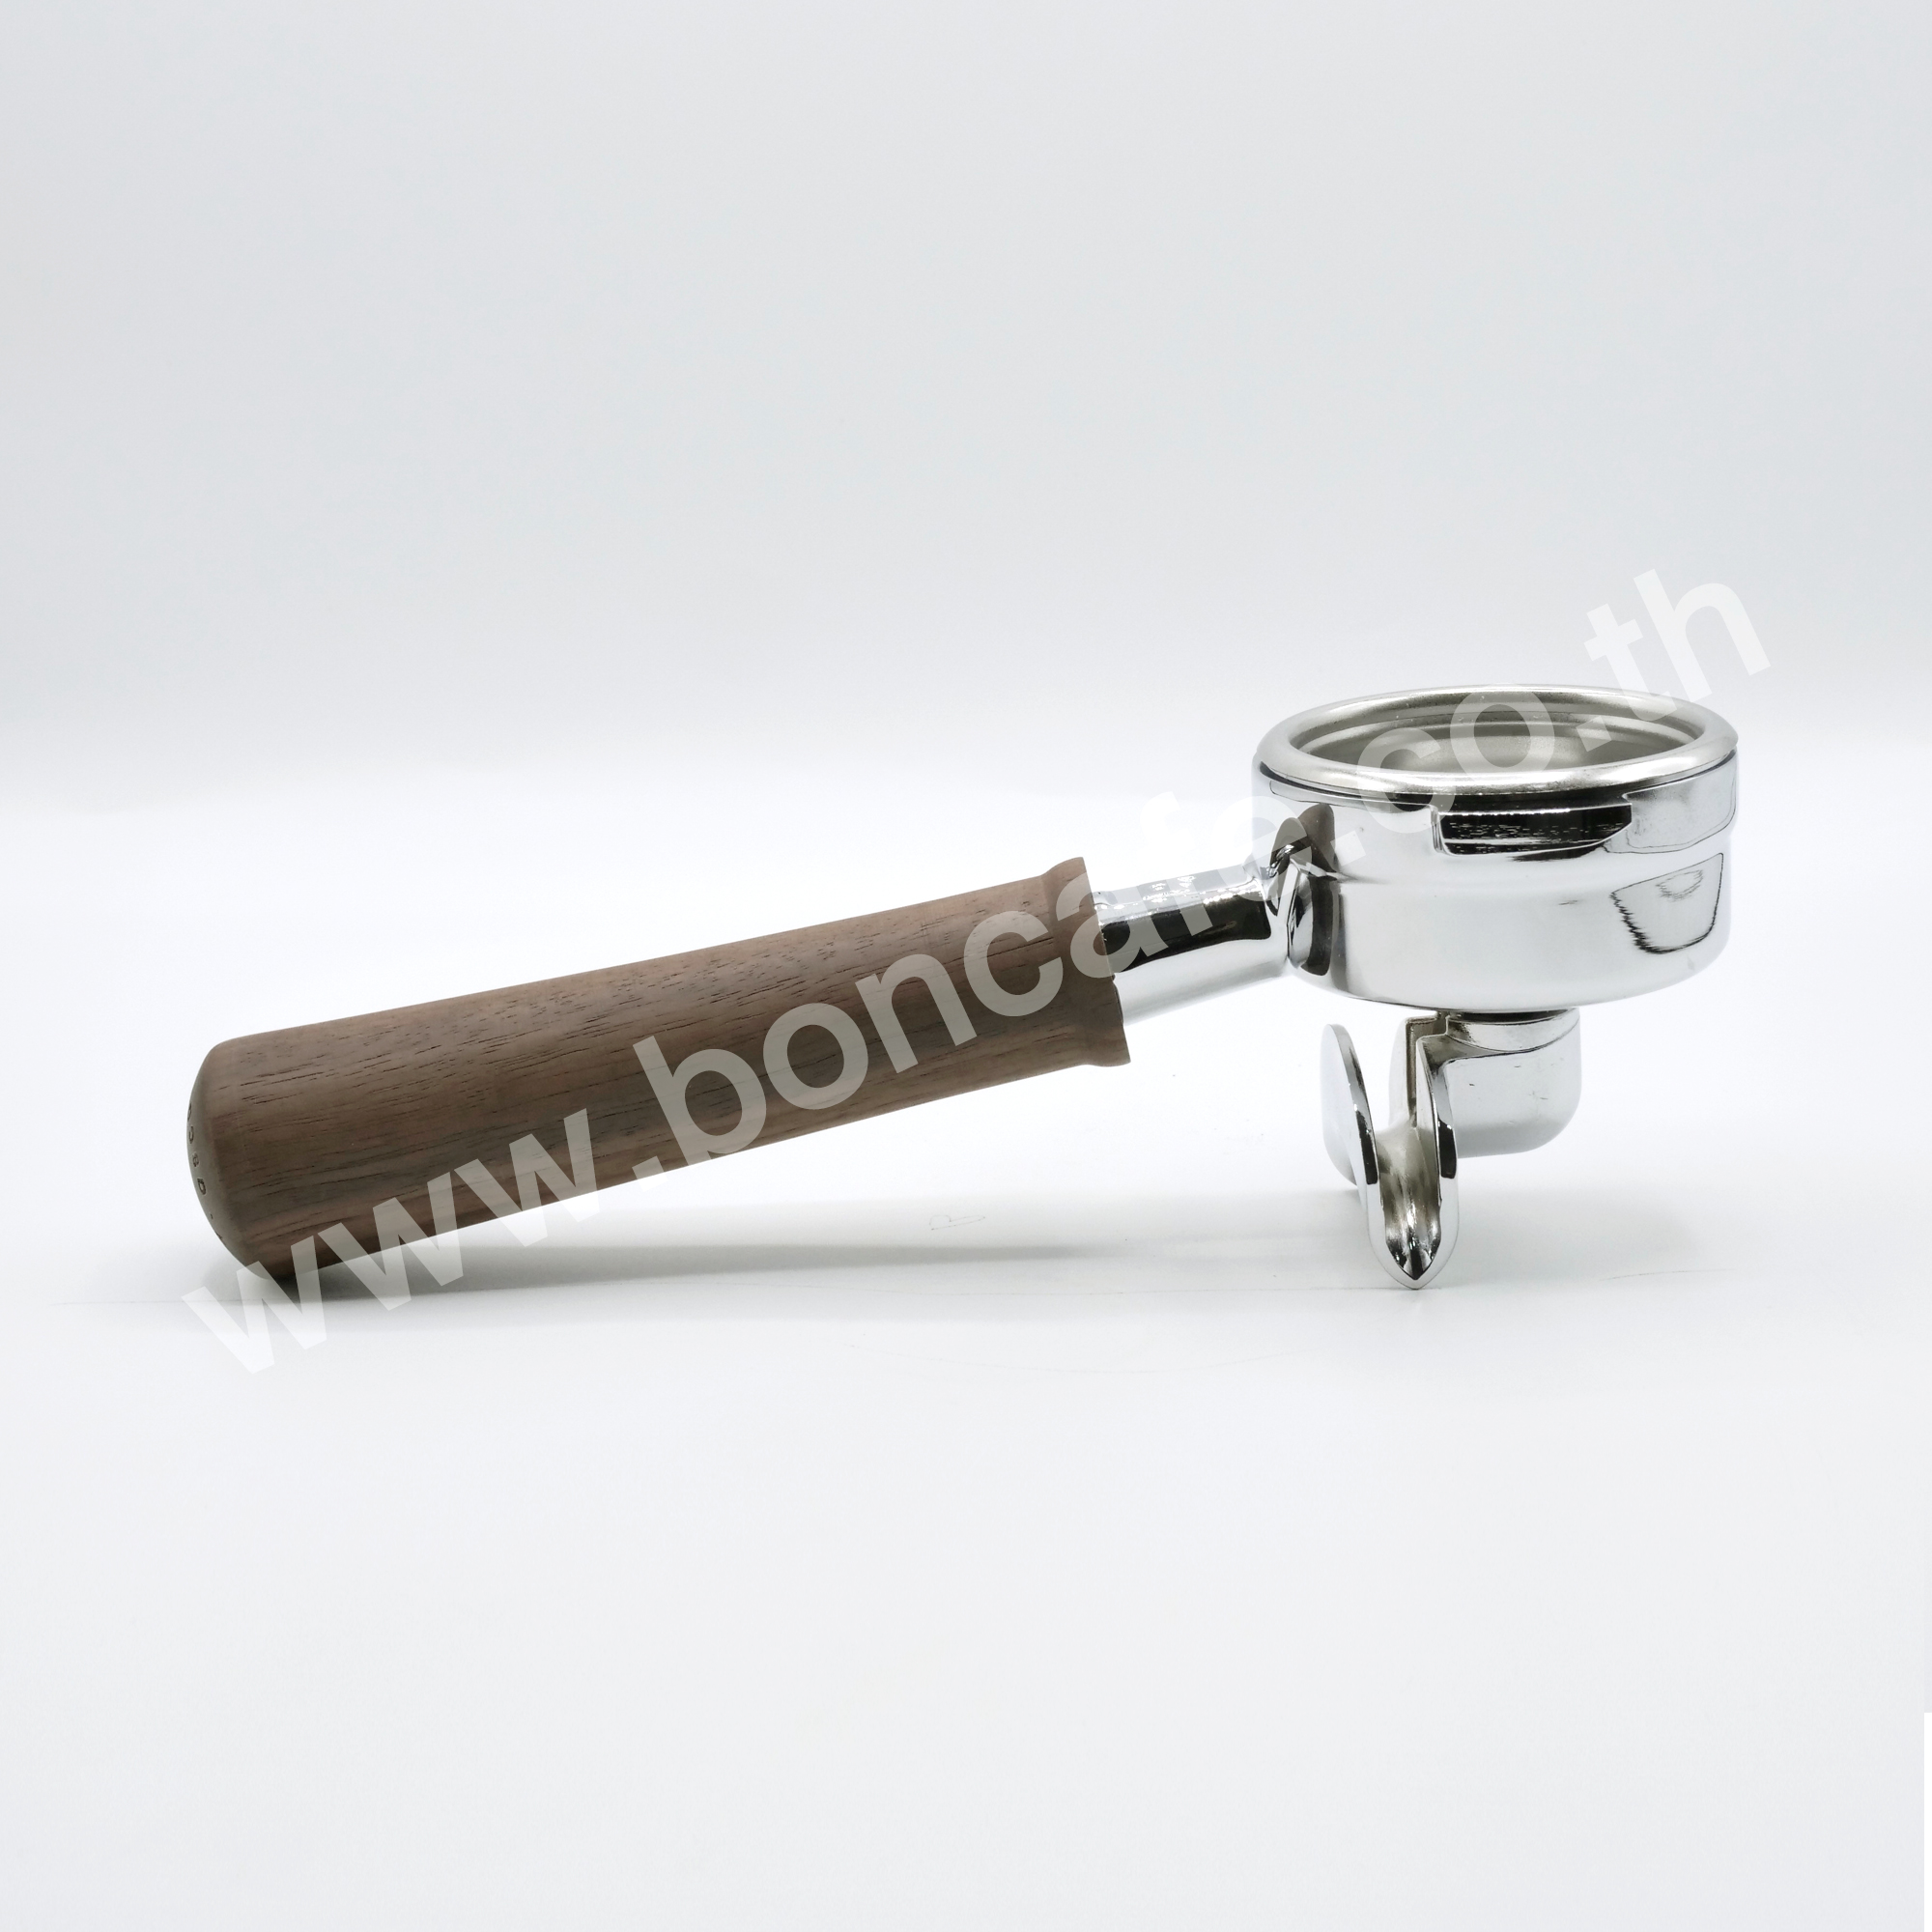 3.-Ascaso-2-Coffees-filterholde-Walnut--wood-handle